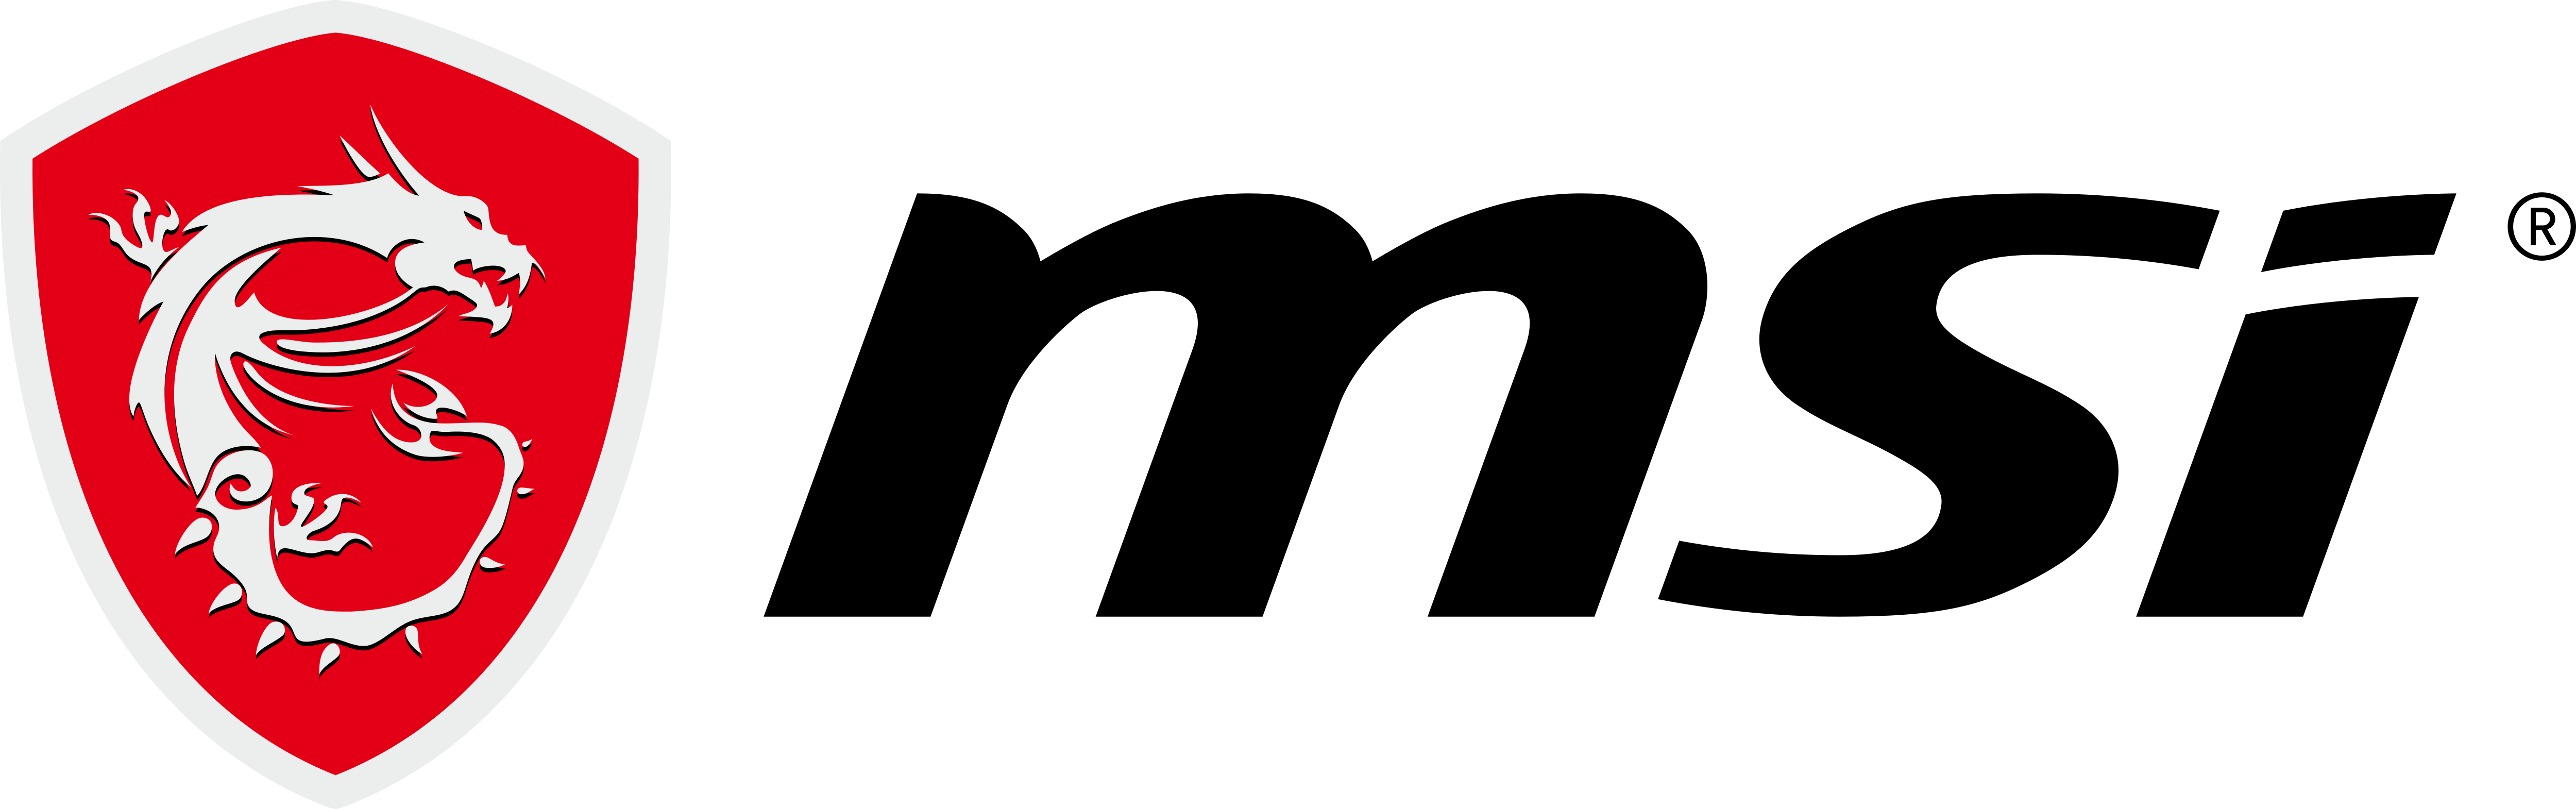 Msi Logo PNG - 176699